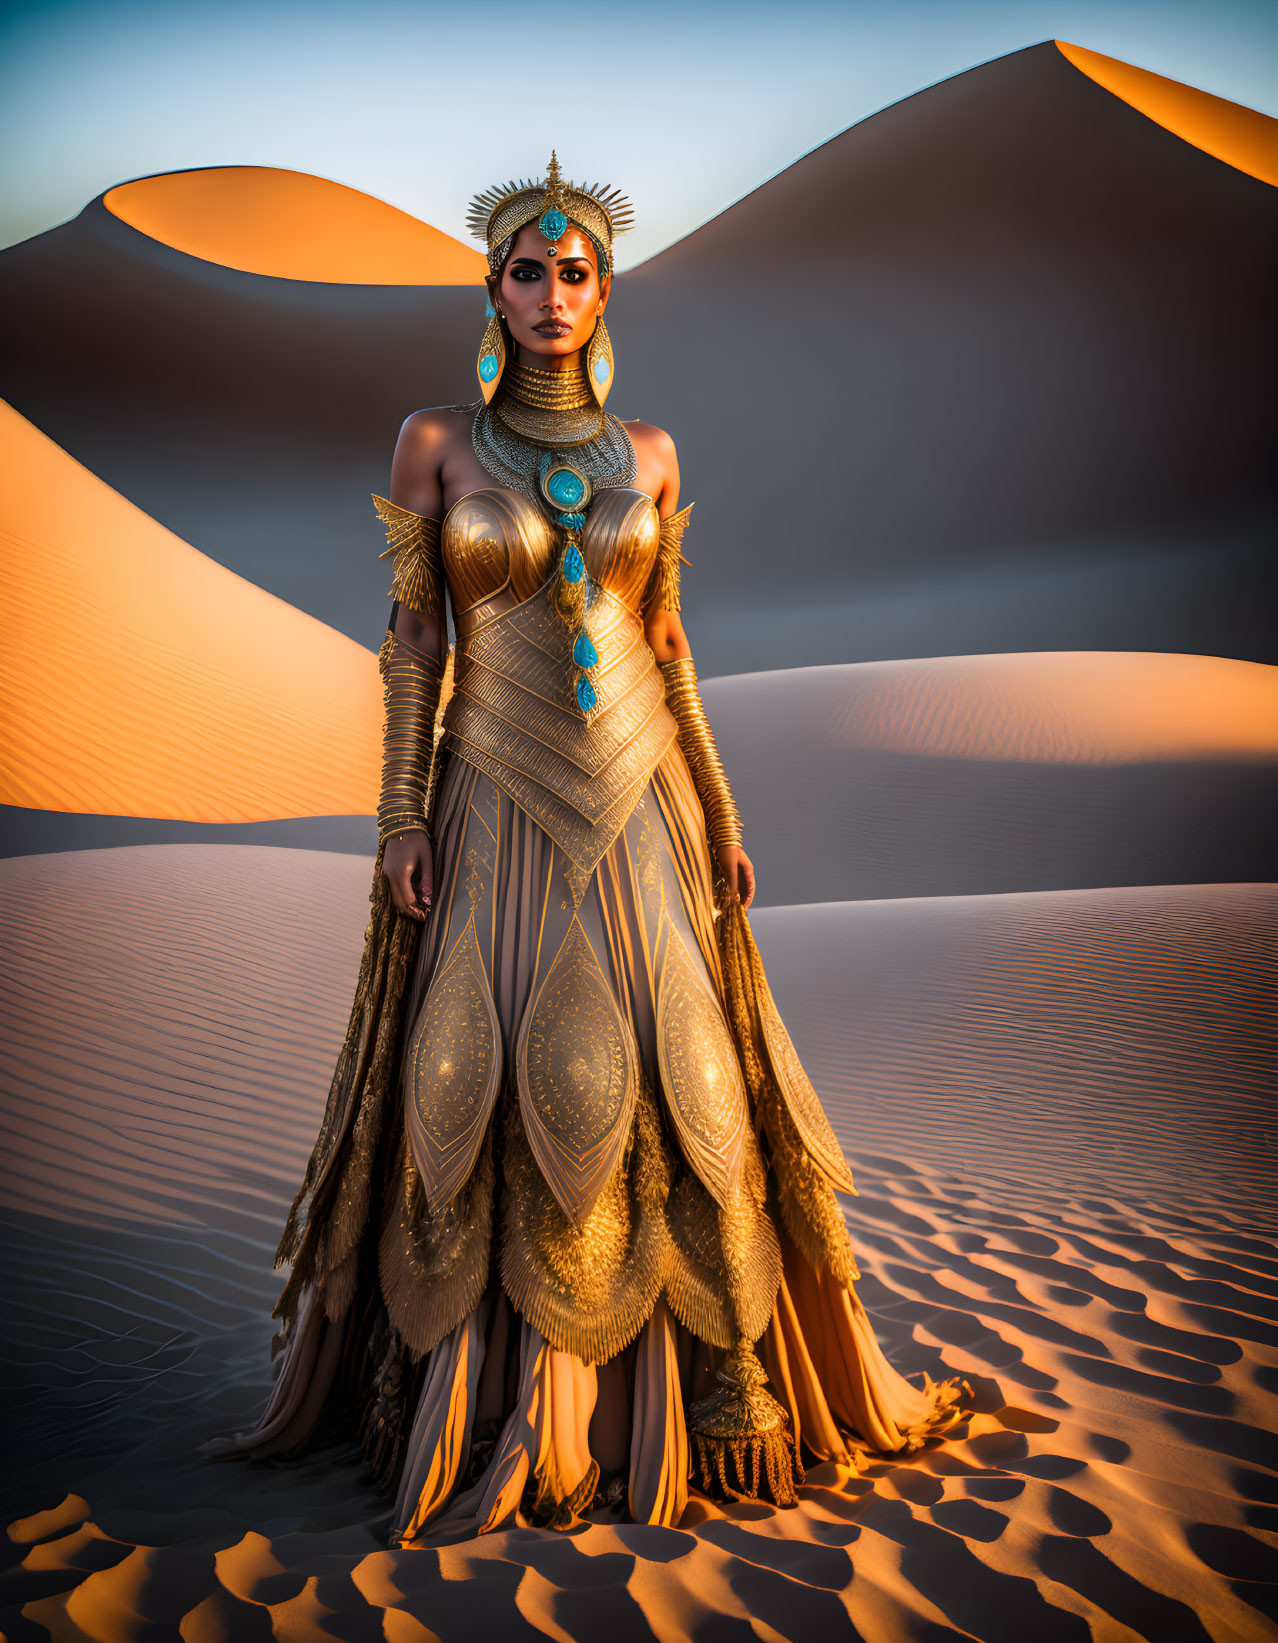 Regal figure in golden attire among sand dunes under warm light